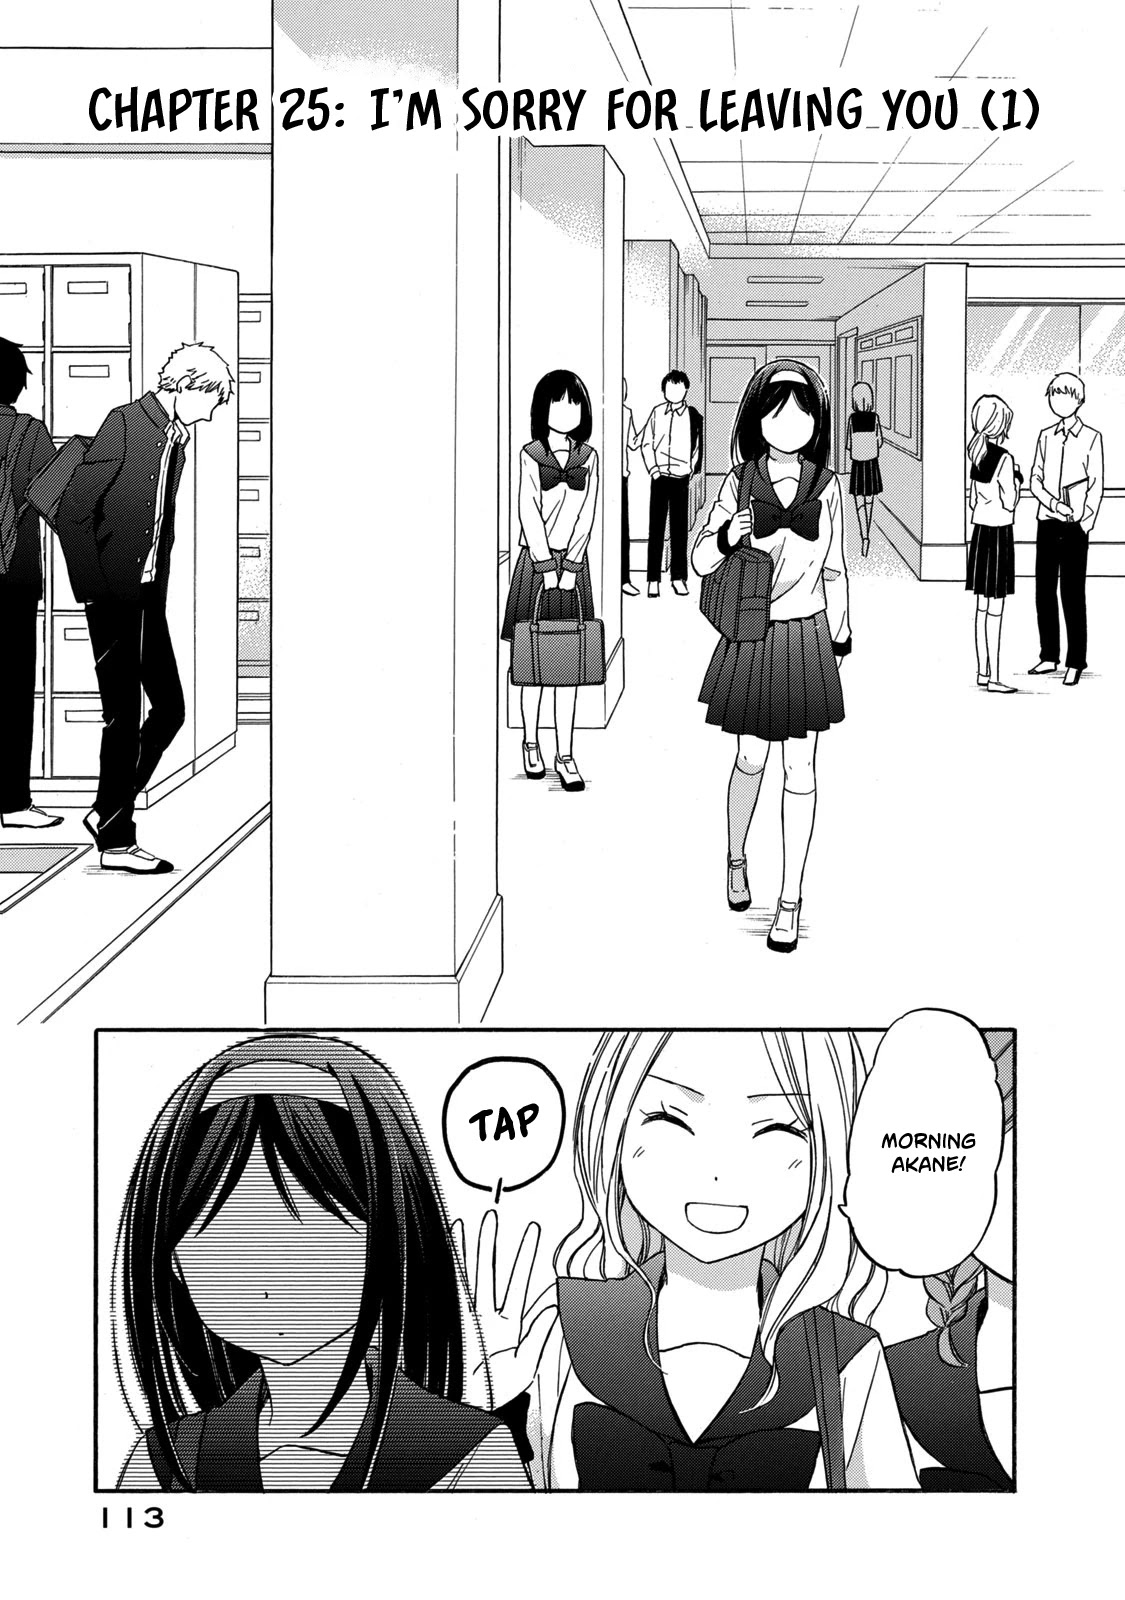 Hanazono And Kazoe's Bizzare After School Rendezvous - Page 1